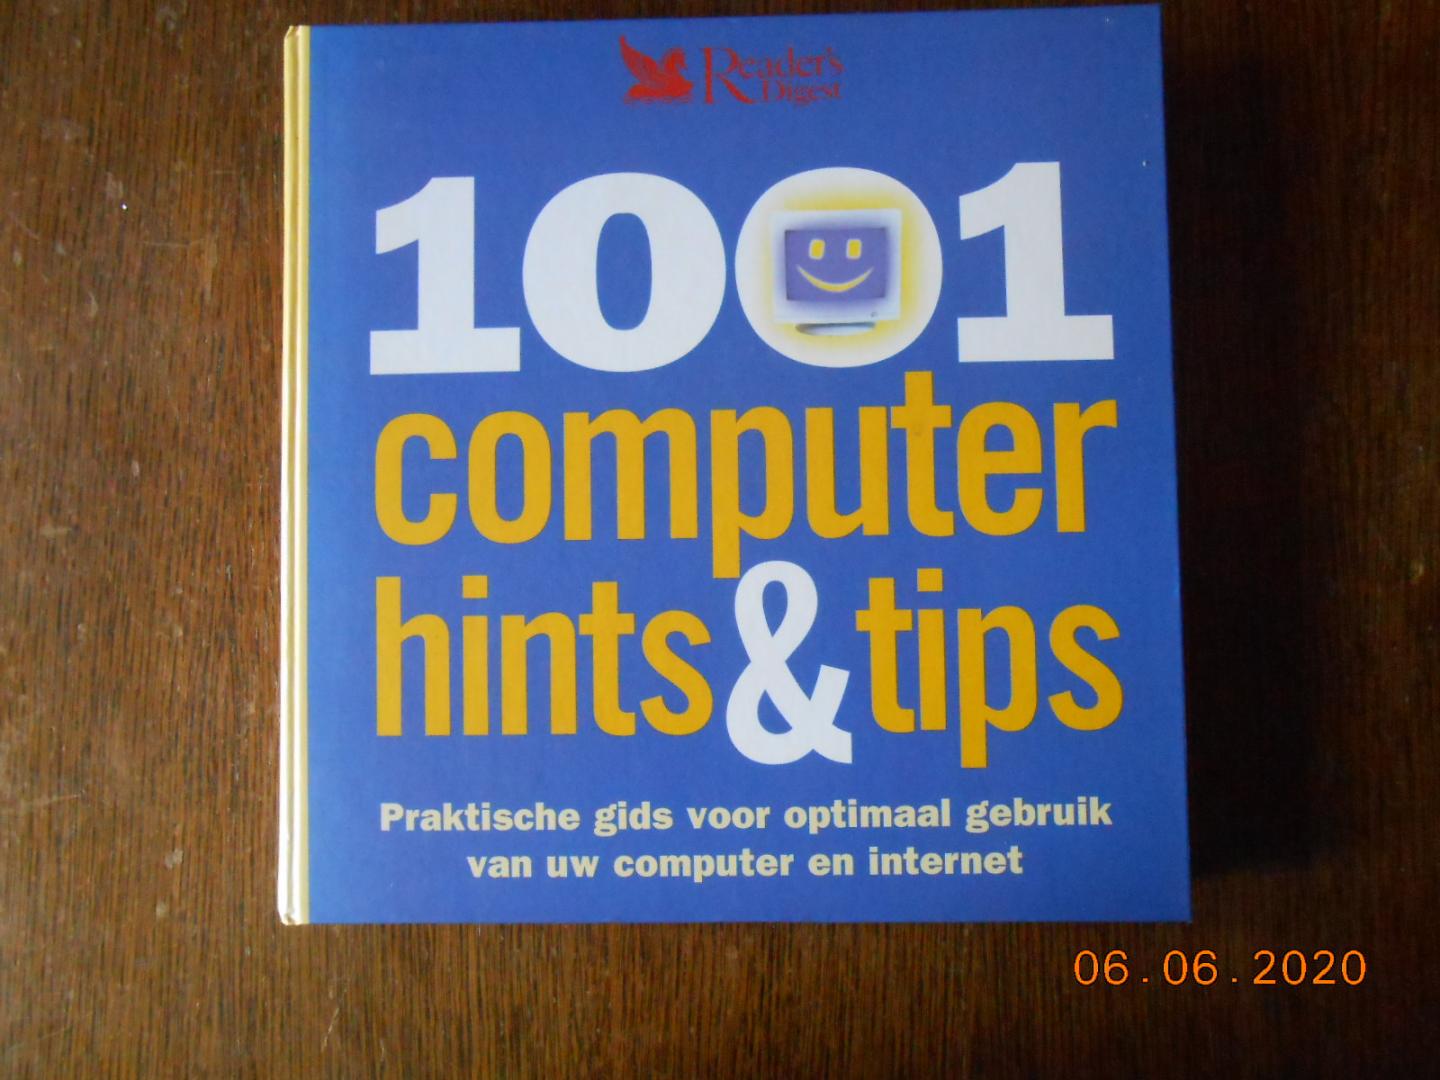  - 1001 computer hints & tips